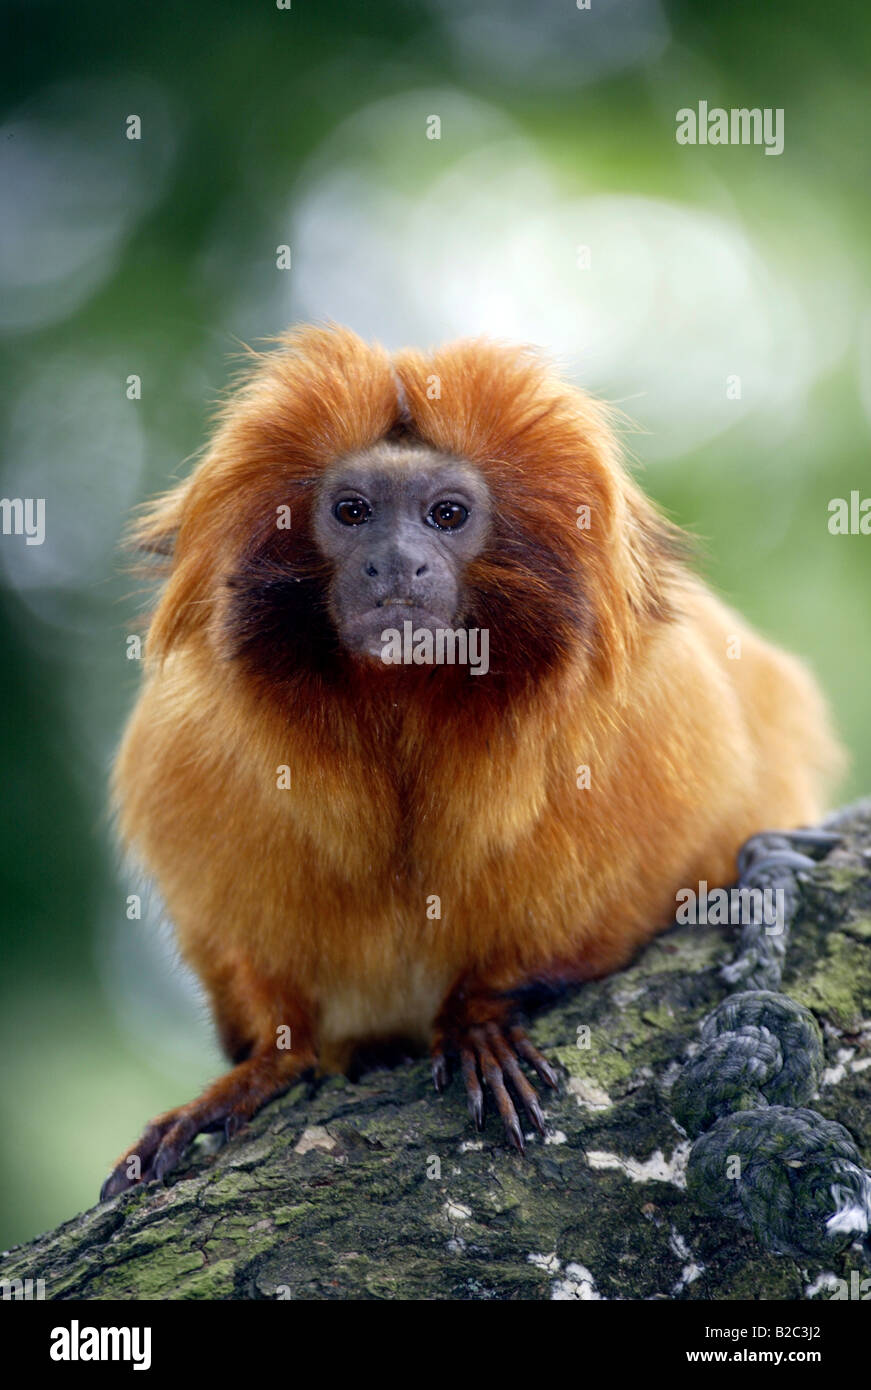 Golden Lion Tamarin Monkey (Leontideus rosalia), adult, portrait, existence : South America Stock Photo